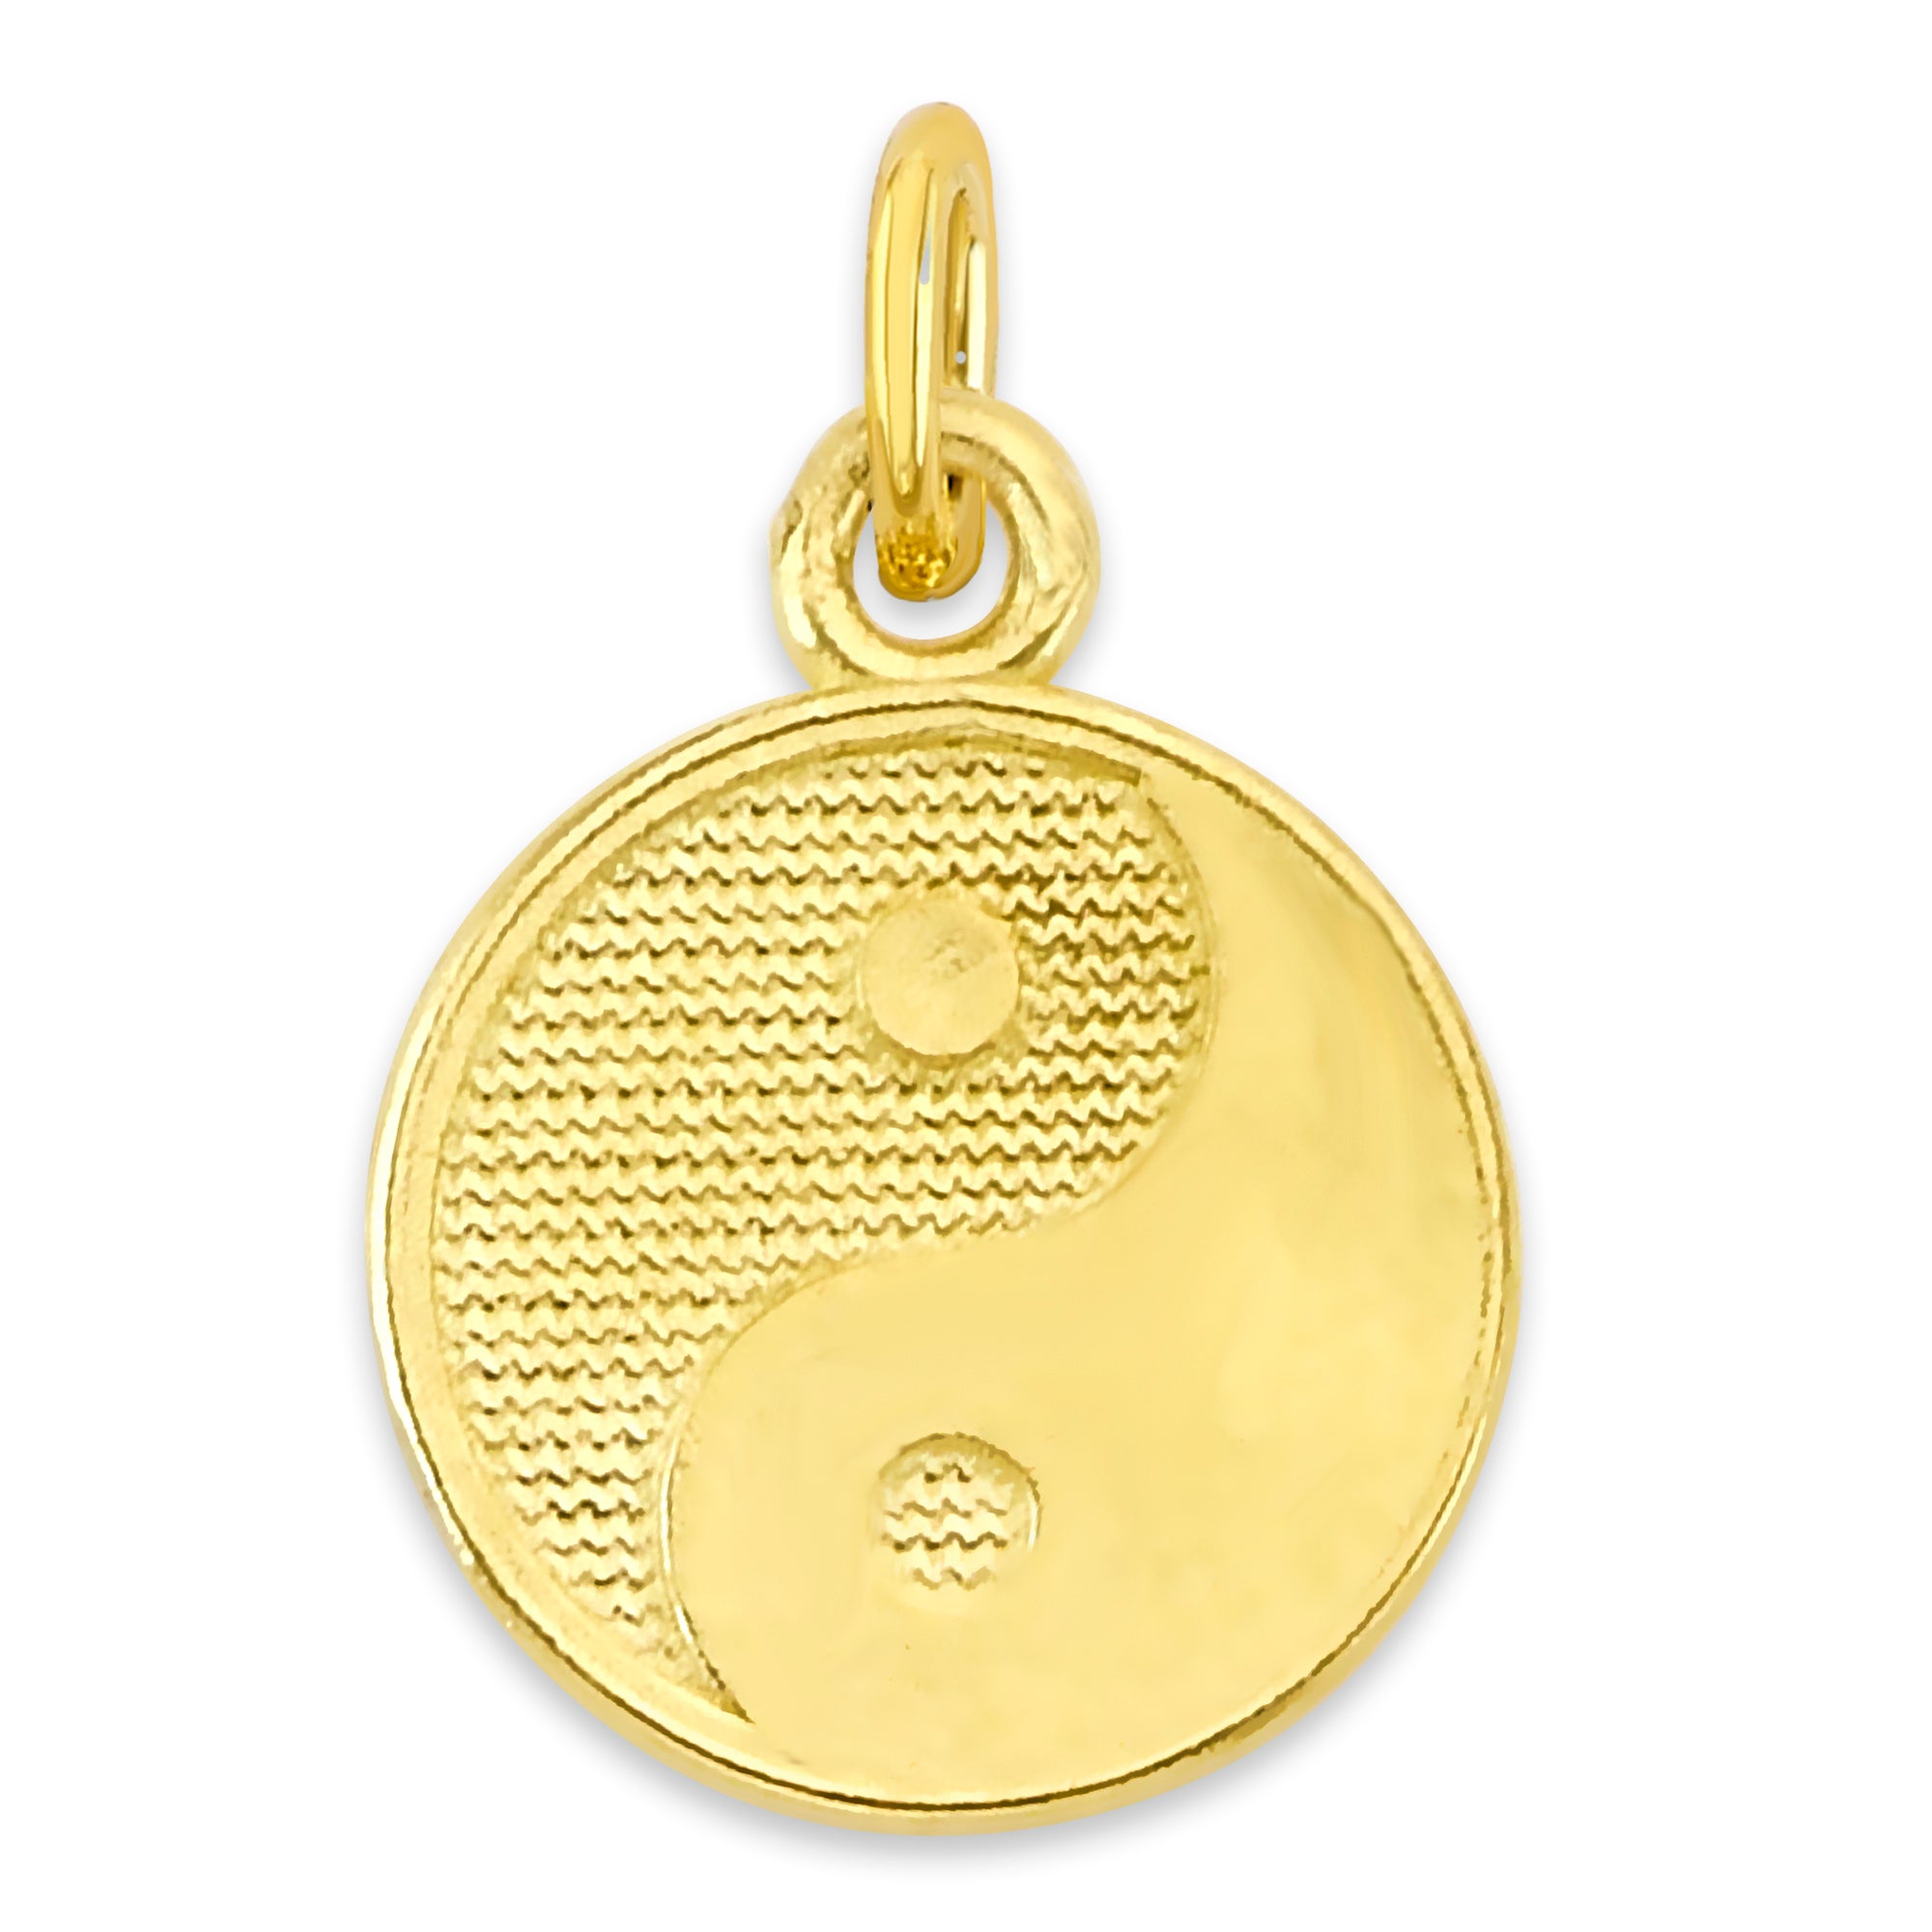 Solid Gold Yin Yang Charm - 10k or 14k